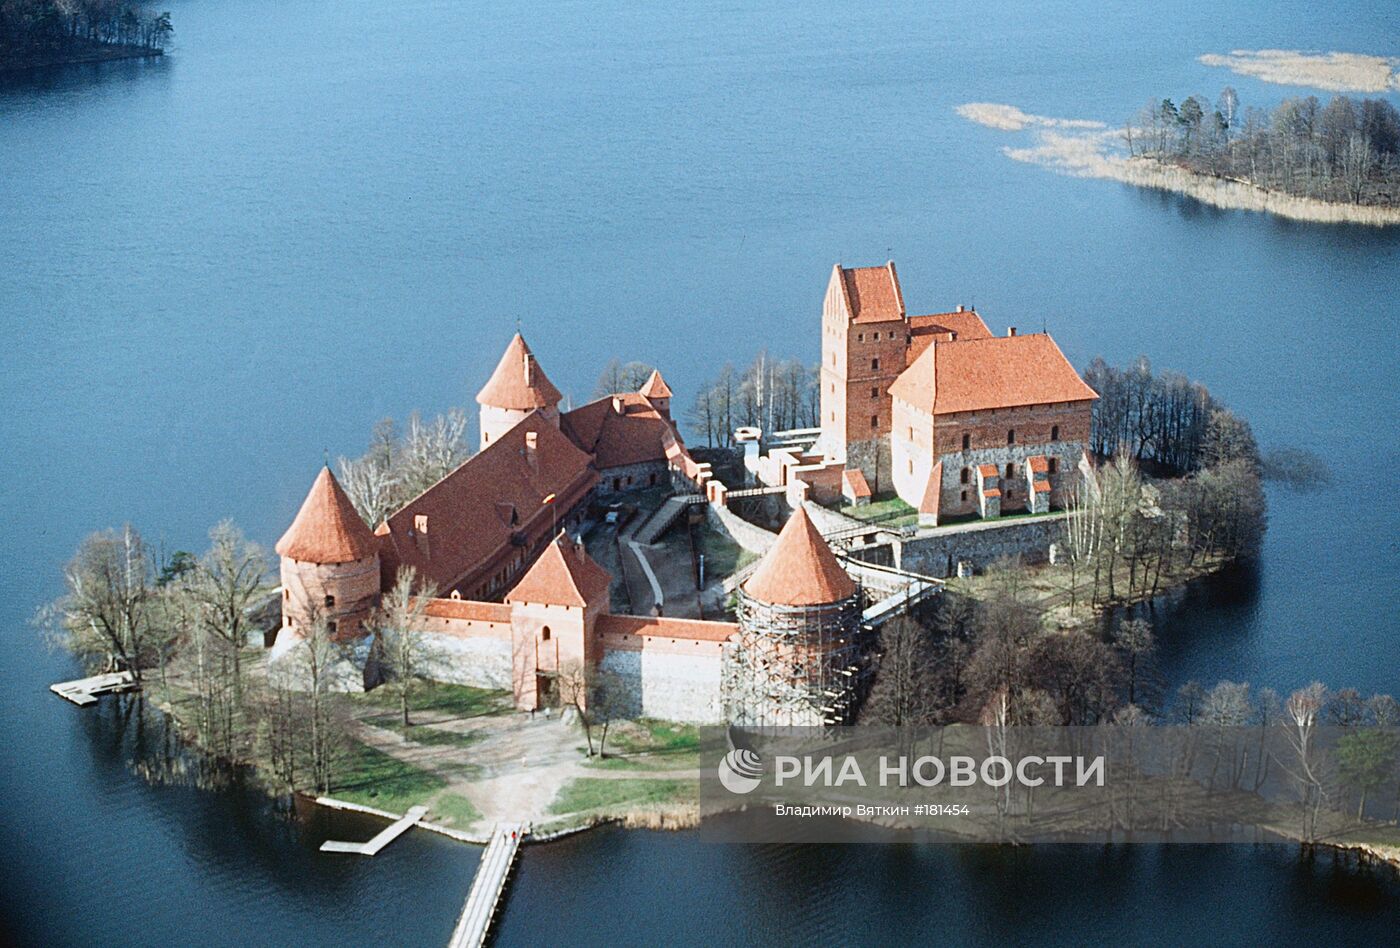 Тракайский замок в Литве (Trakai Island Castle)